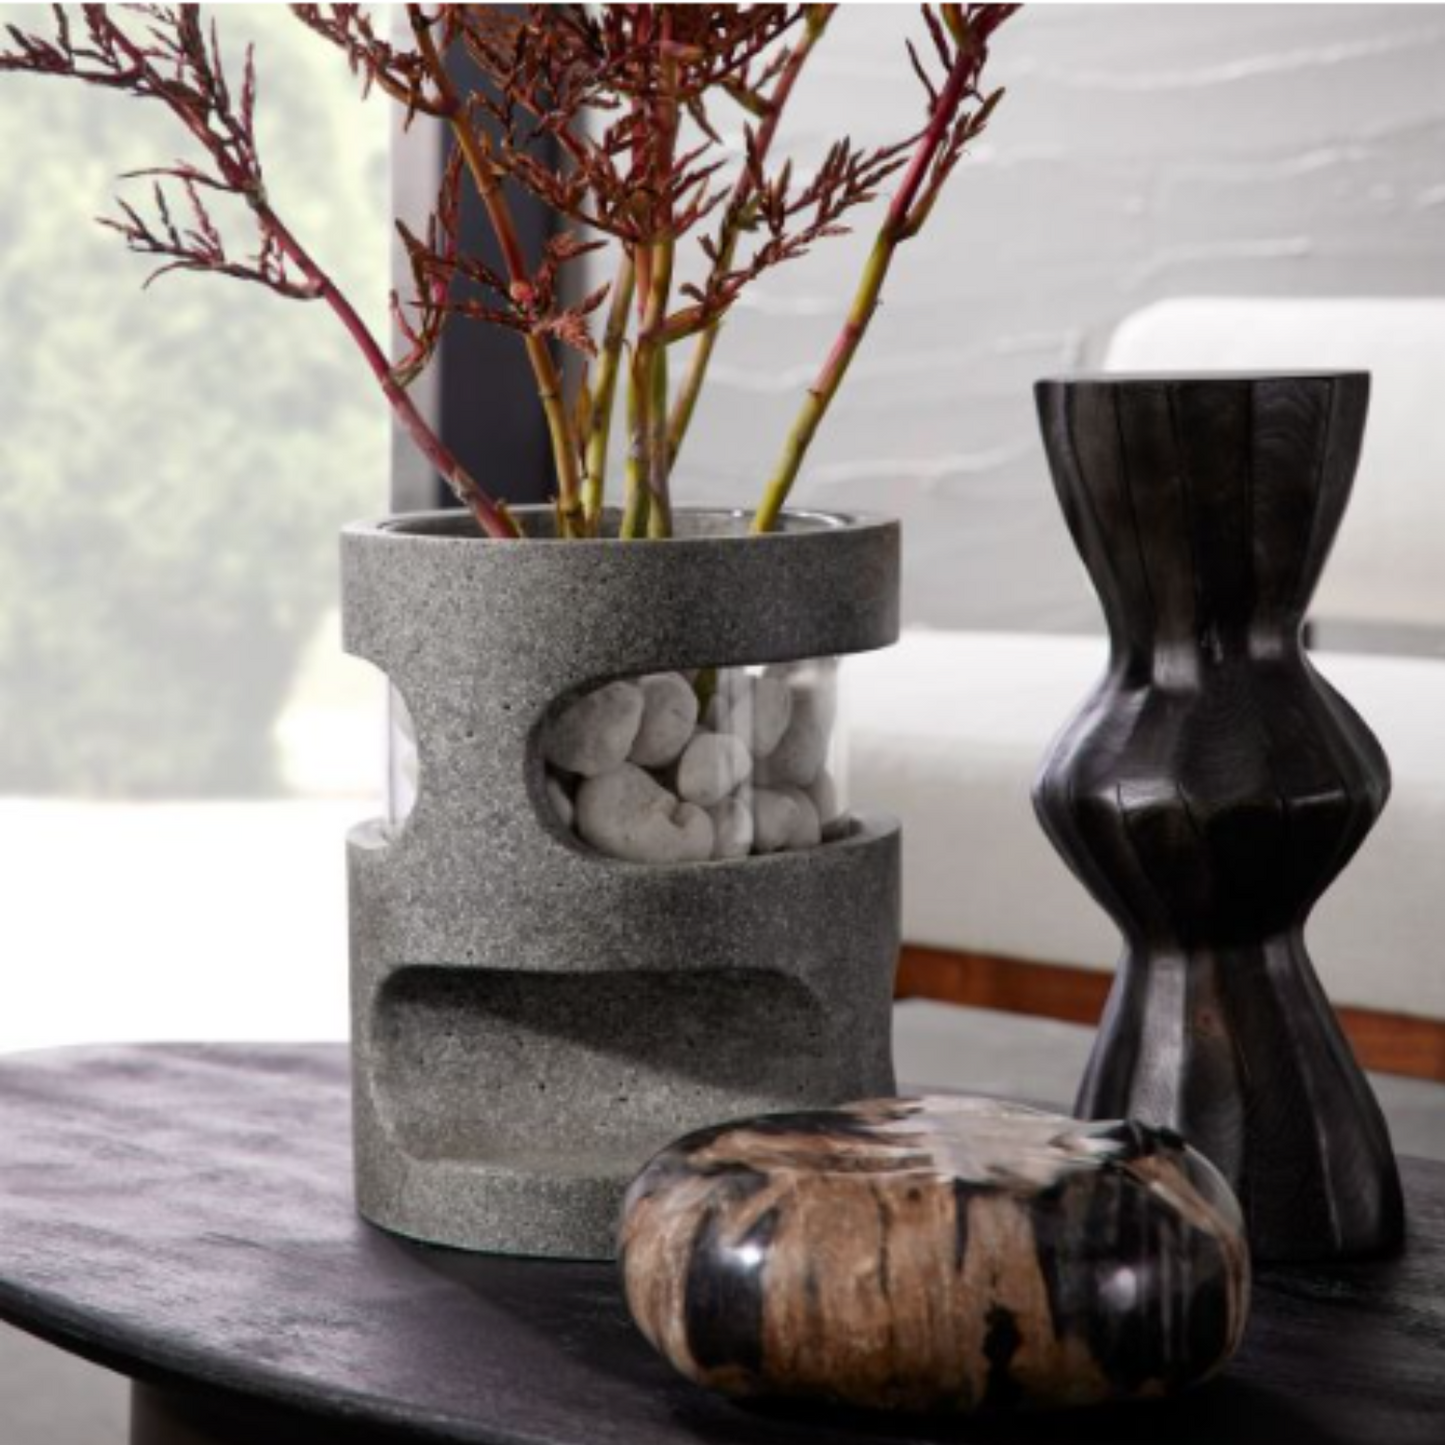 Renton Hurricane - Graphite Ricestone Composite Cubist-Style Candle Holder/Vase